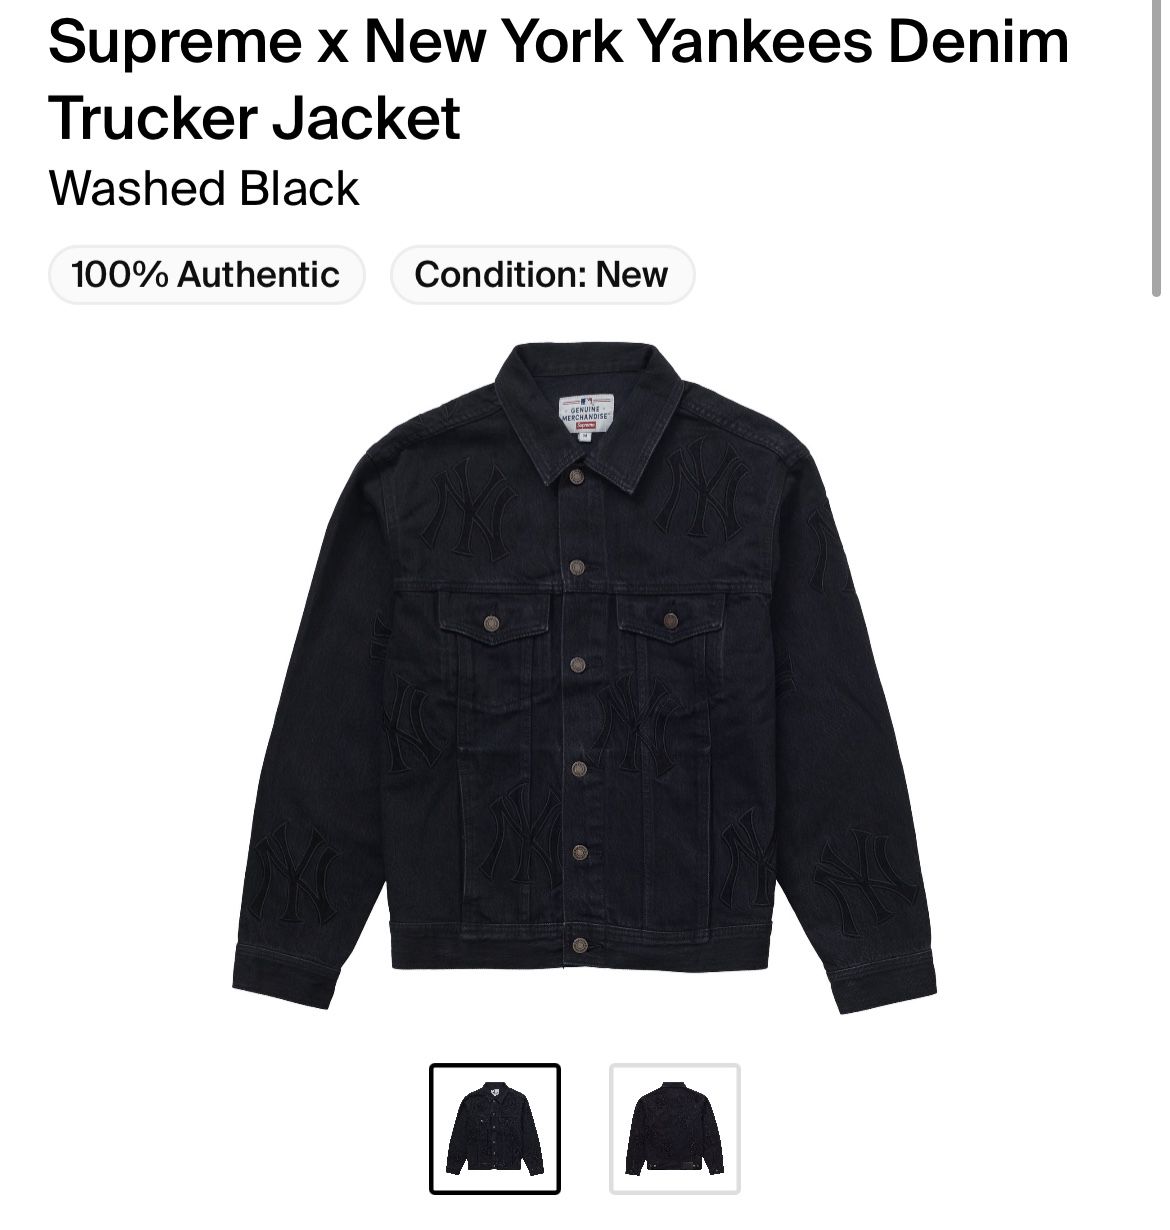 Supreme Black NY Yankee Denim Trucker Jacket - Size Medium